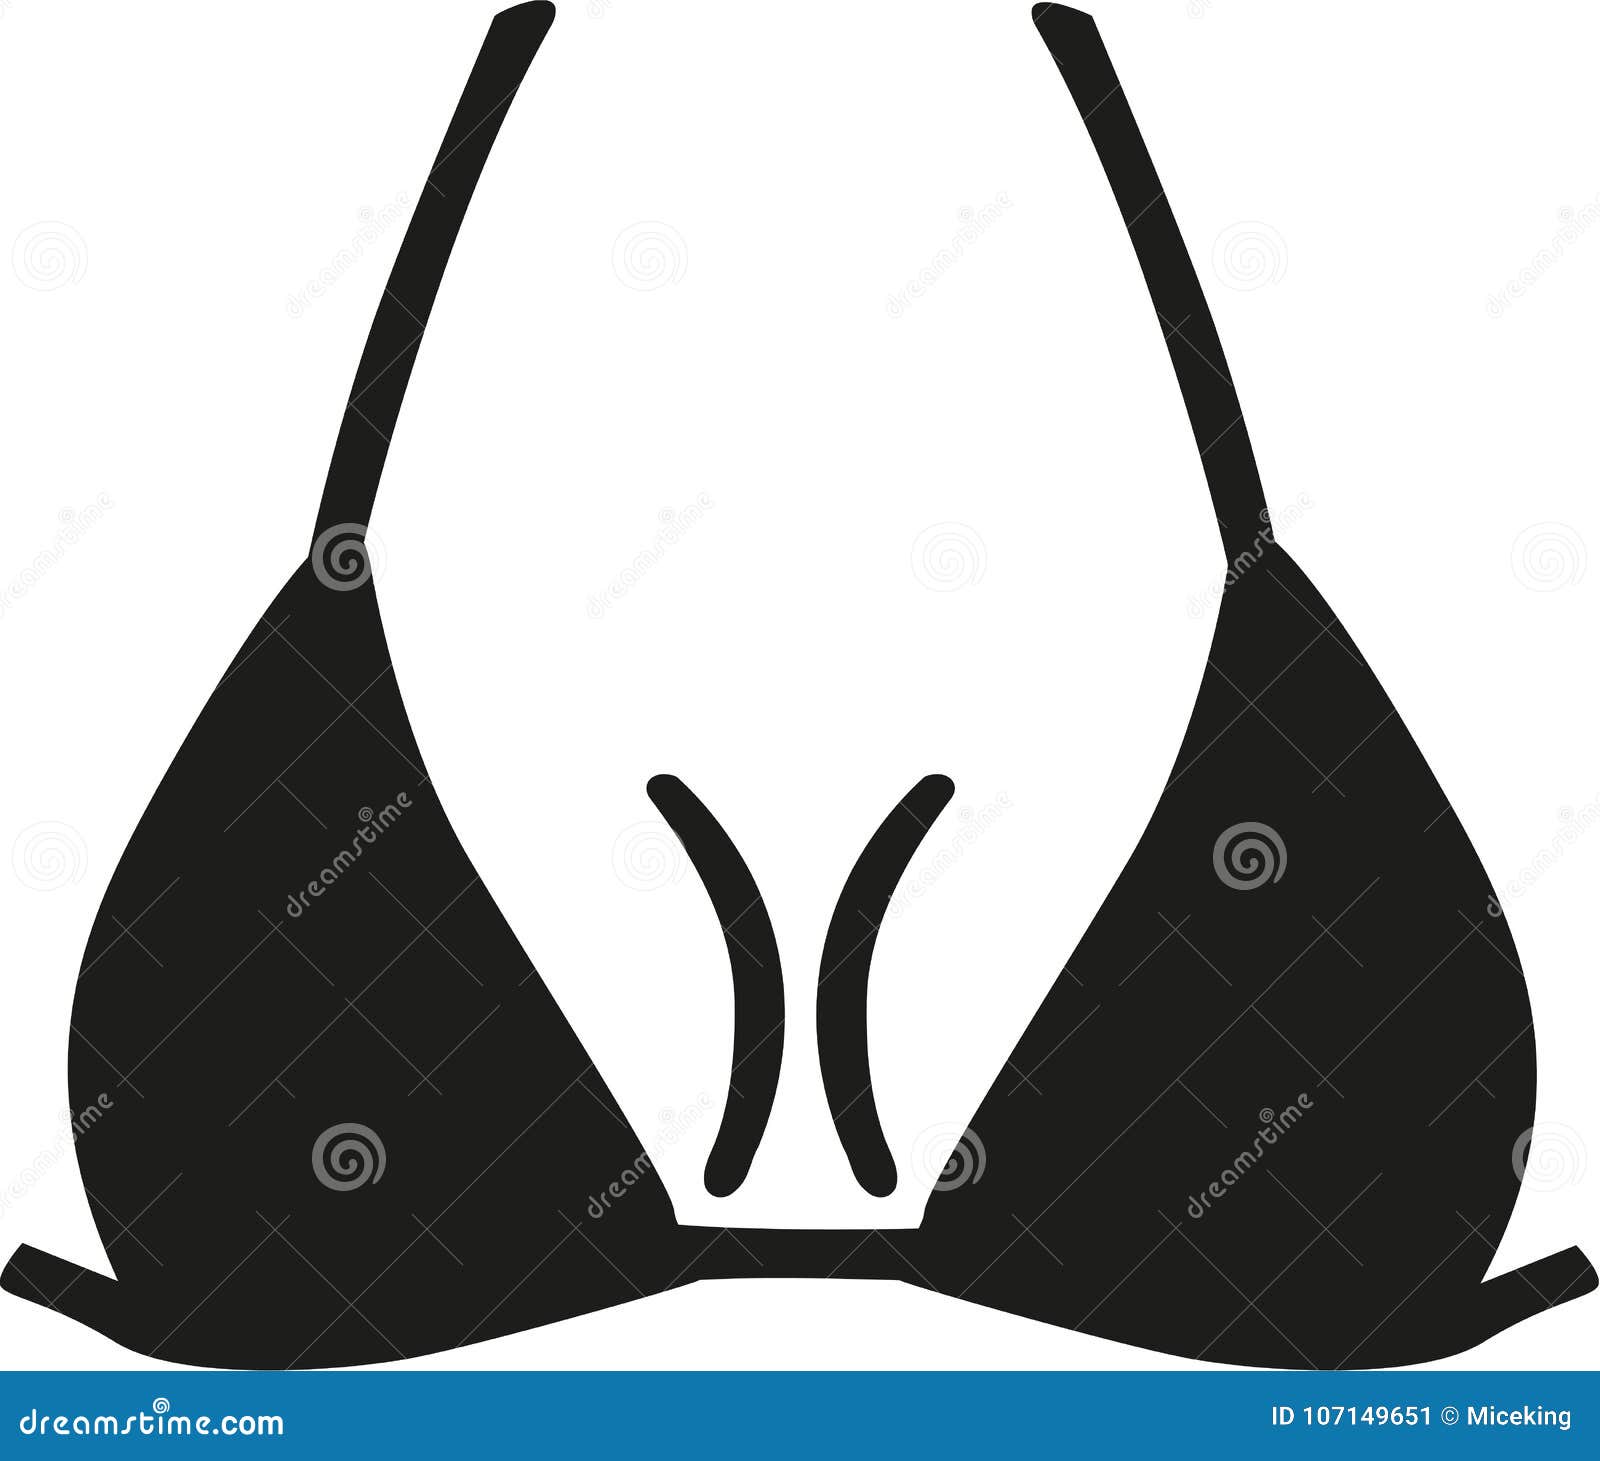 Triangle bikini with boobs stock illustration. Illustration of